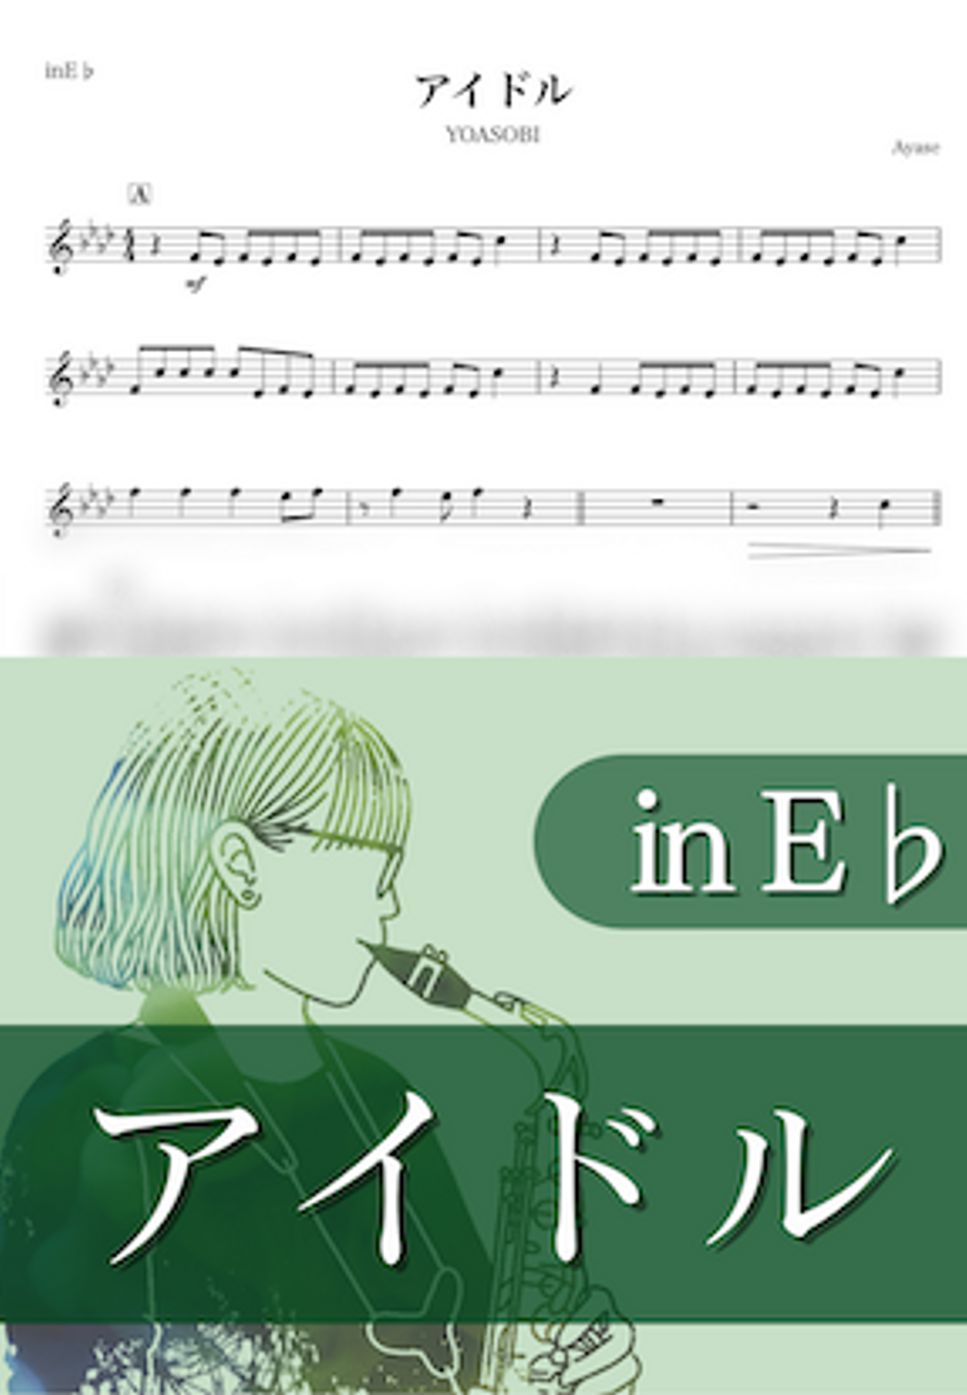 YOASOBI - アイドル (E♭) by kanamusic